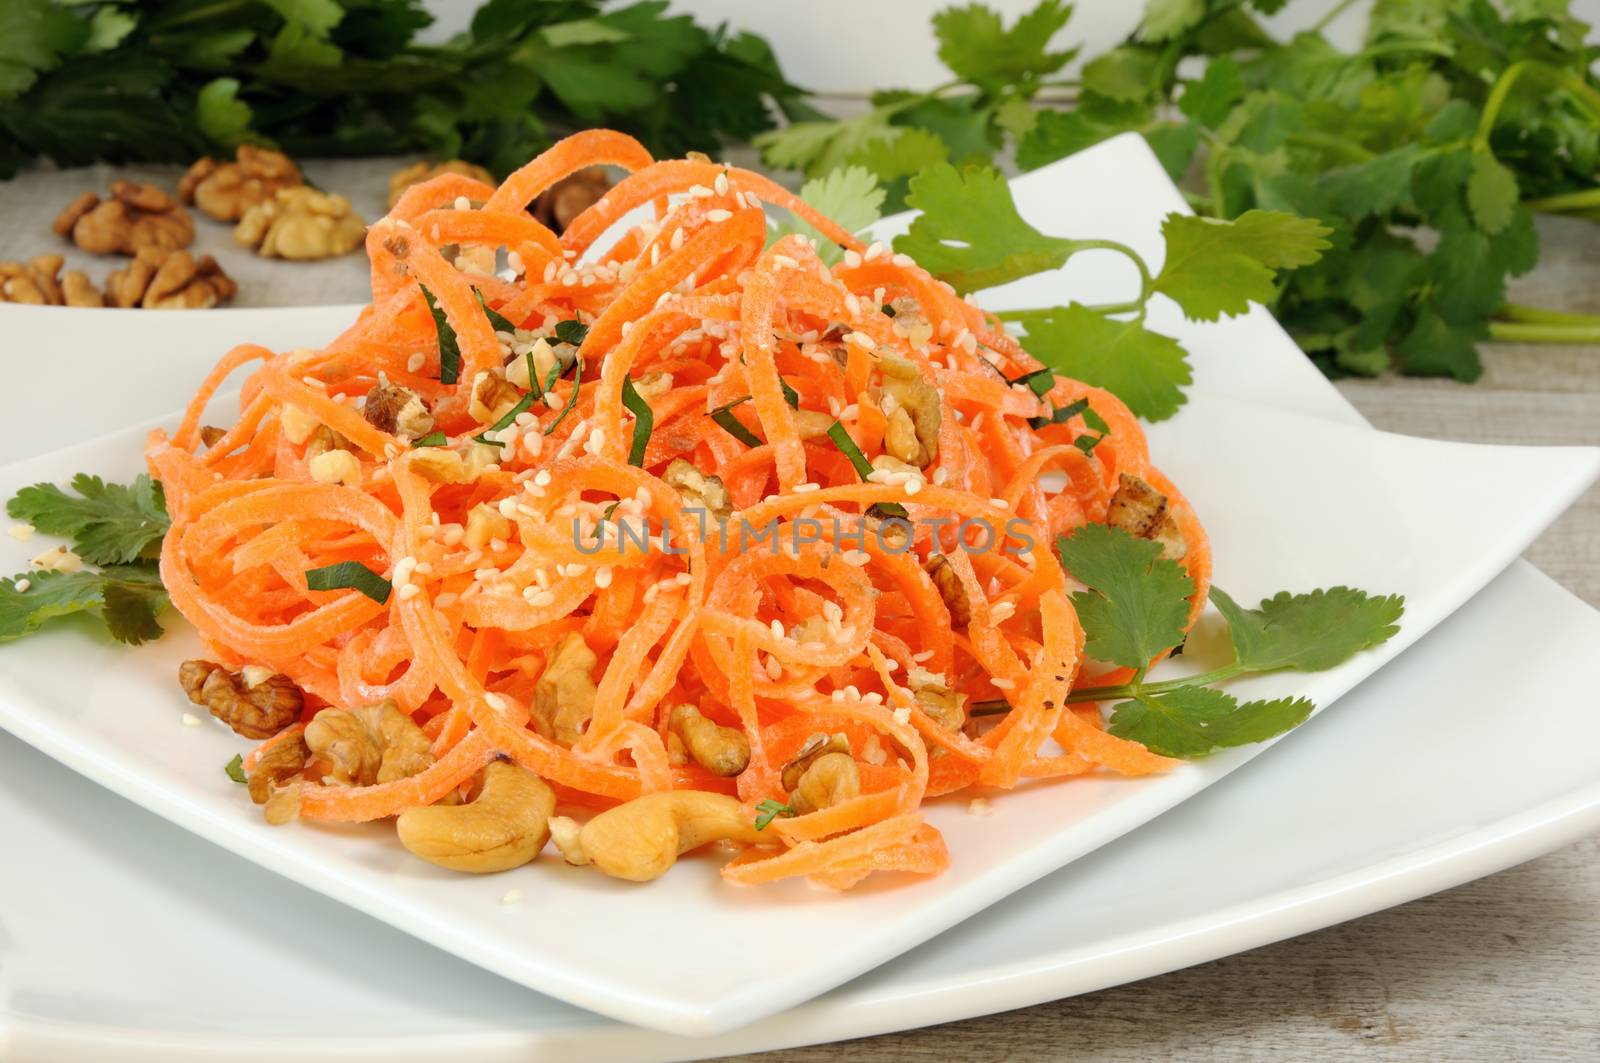 Carrot ribbon salad by Apolonia